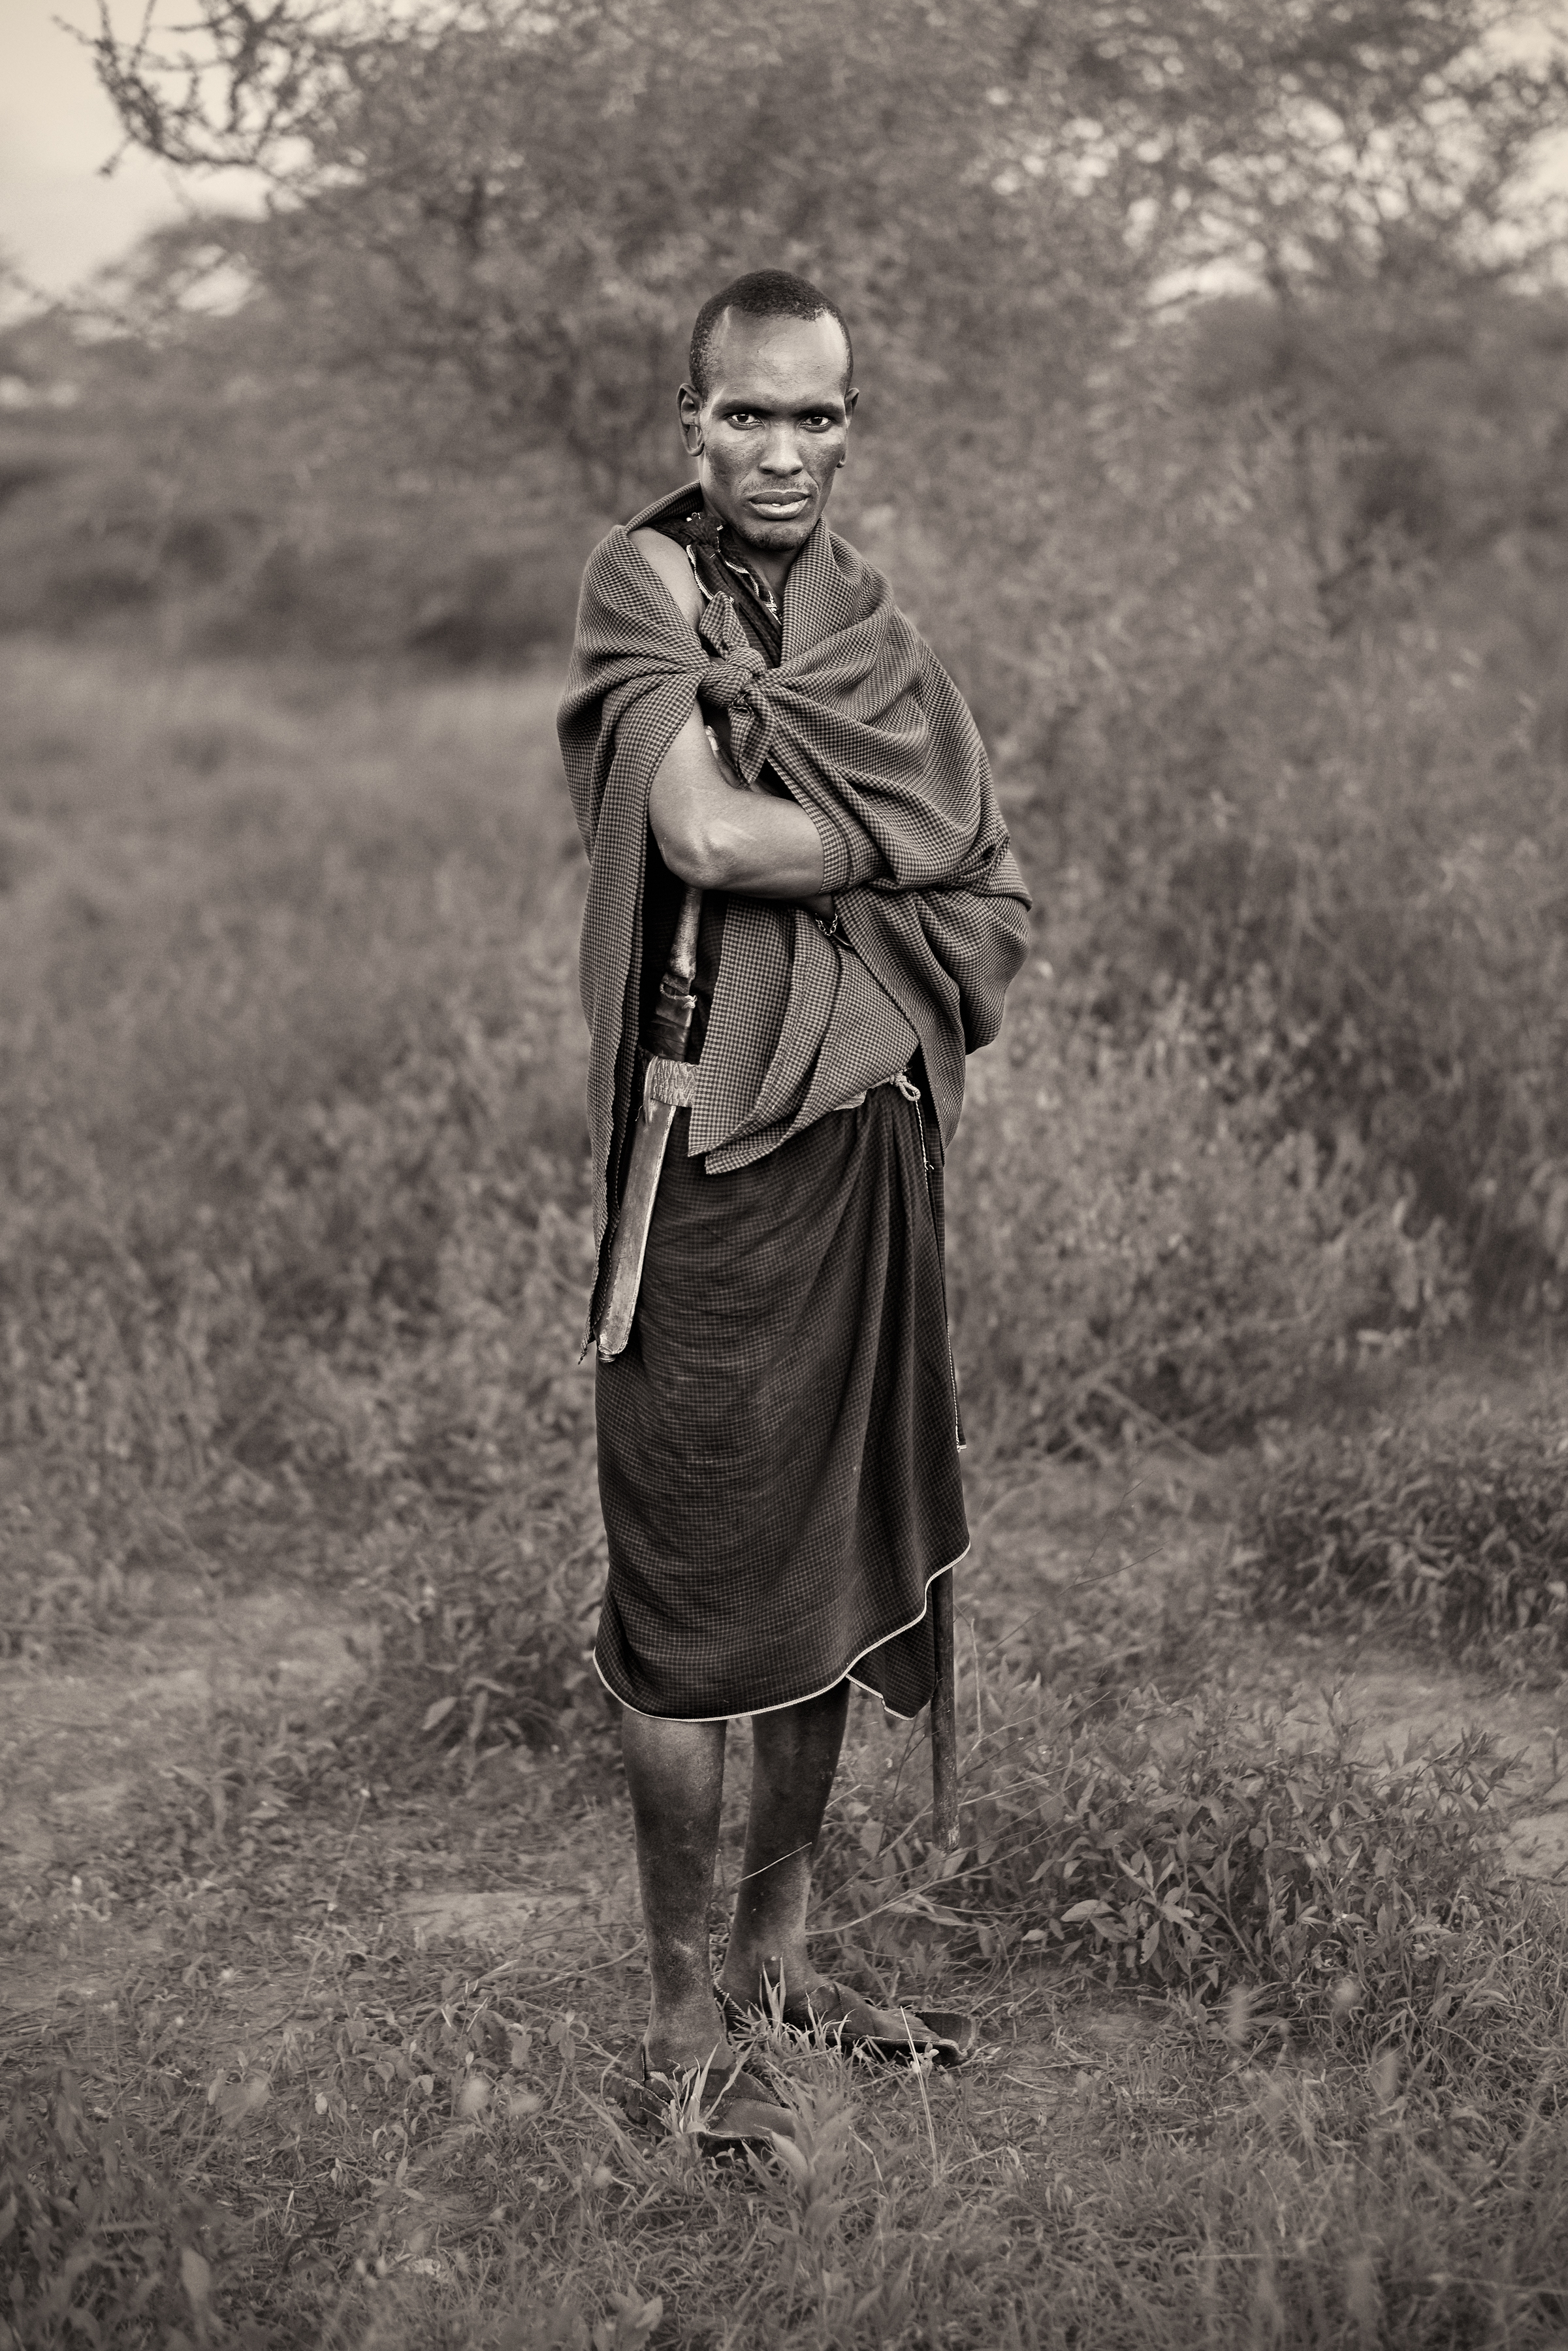 Ilan Wittenberg, from The Maasai People